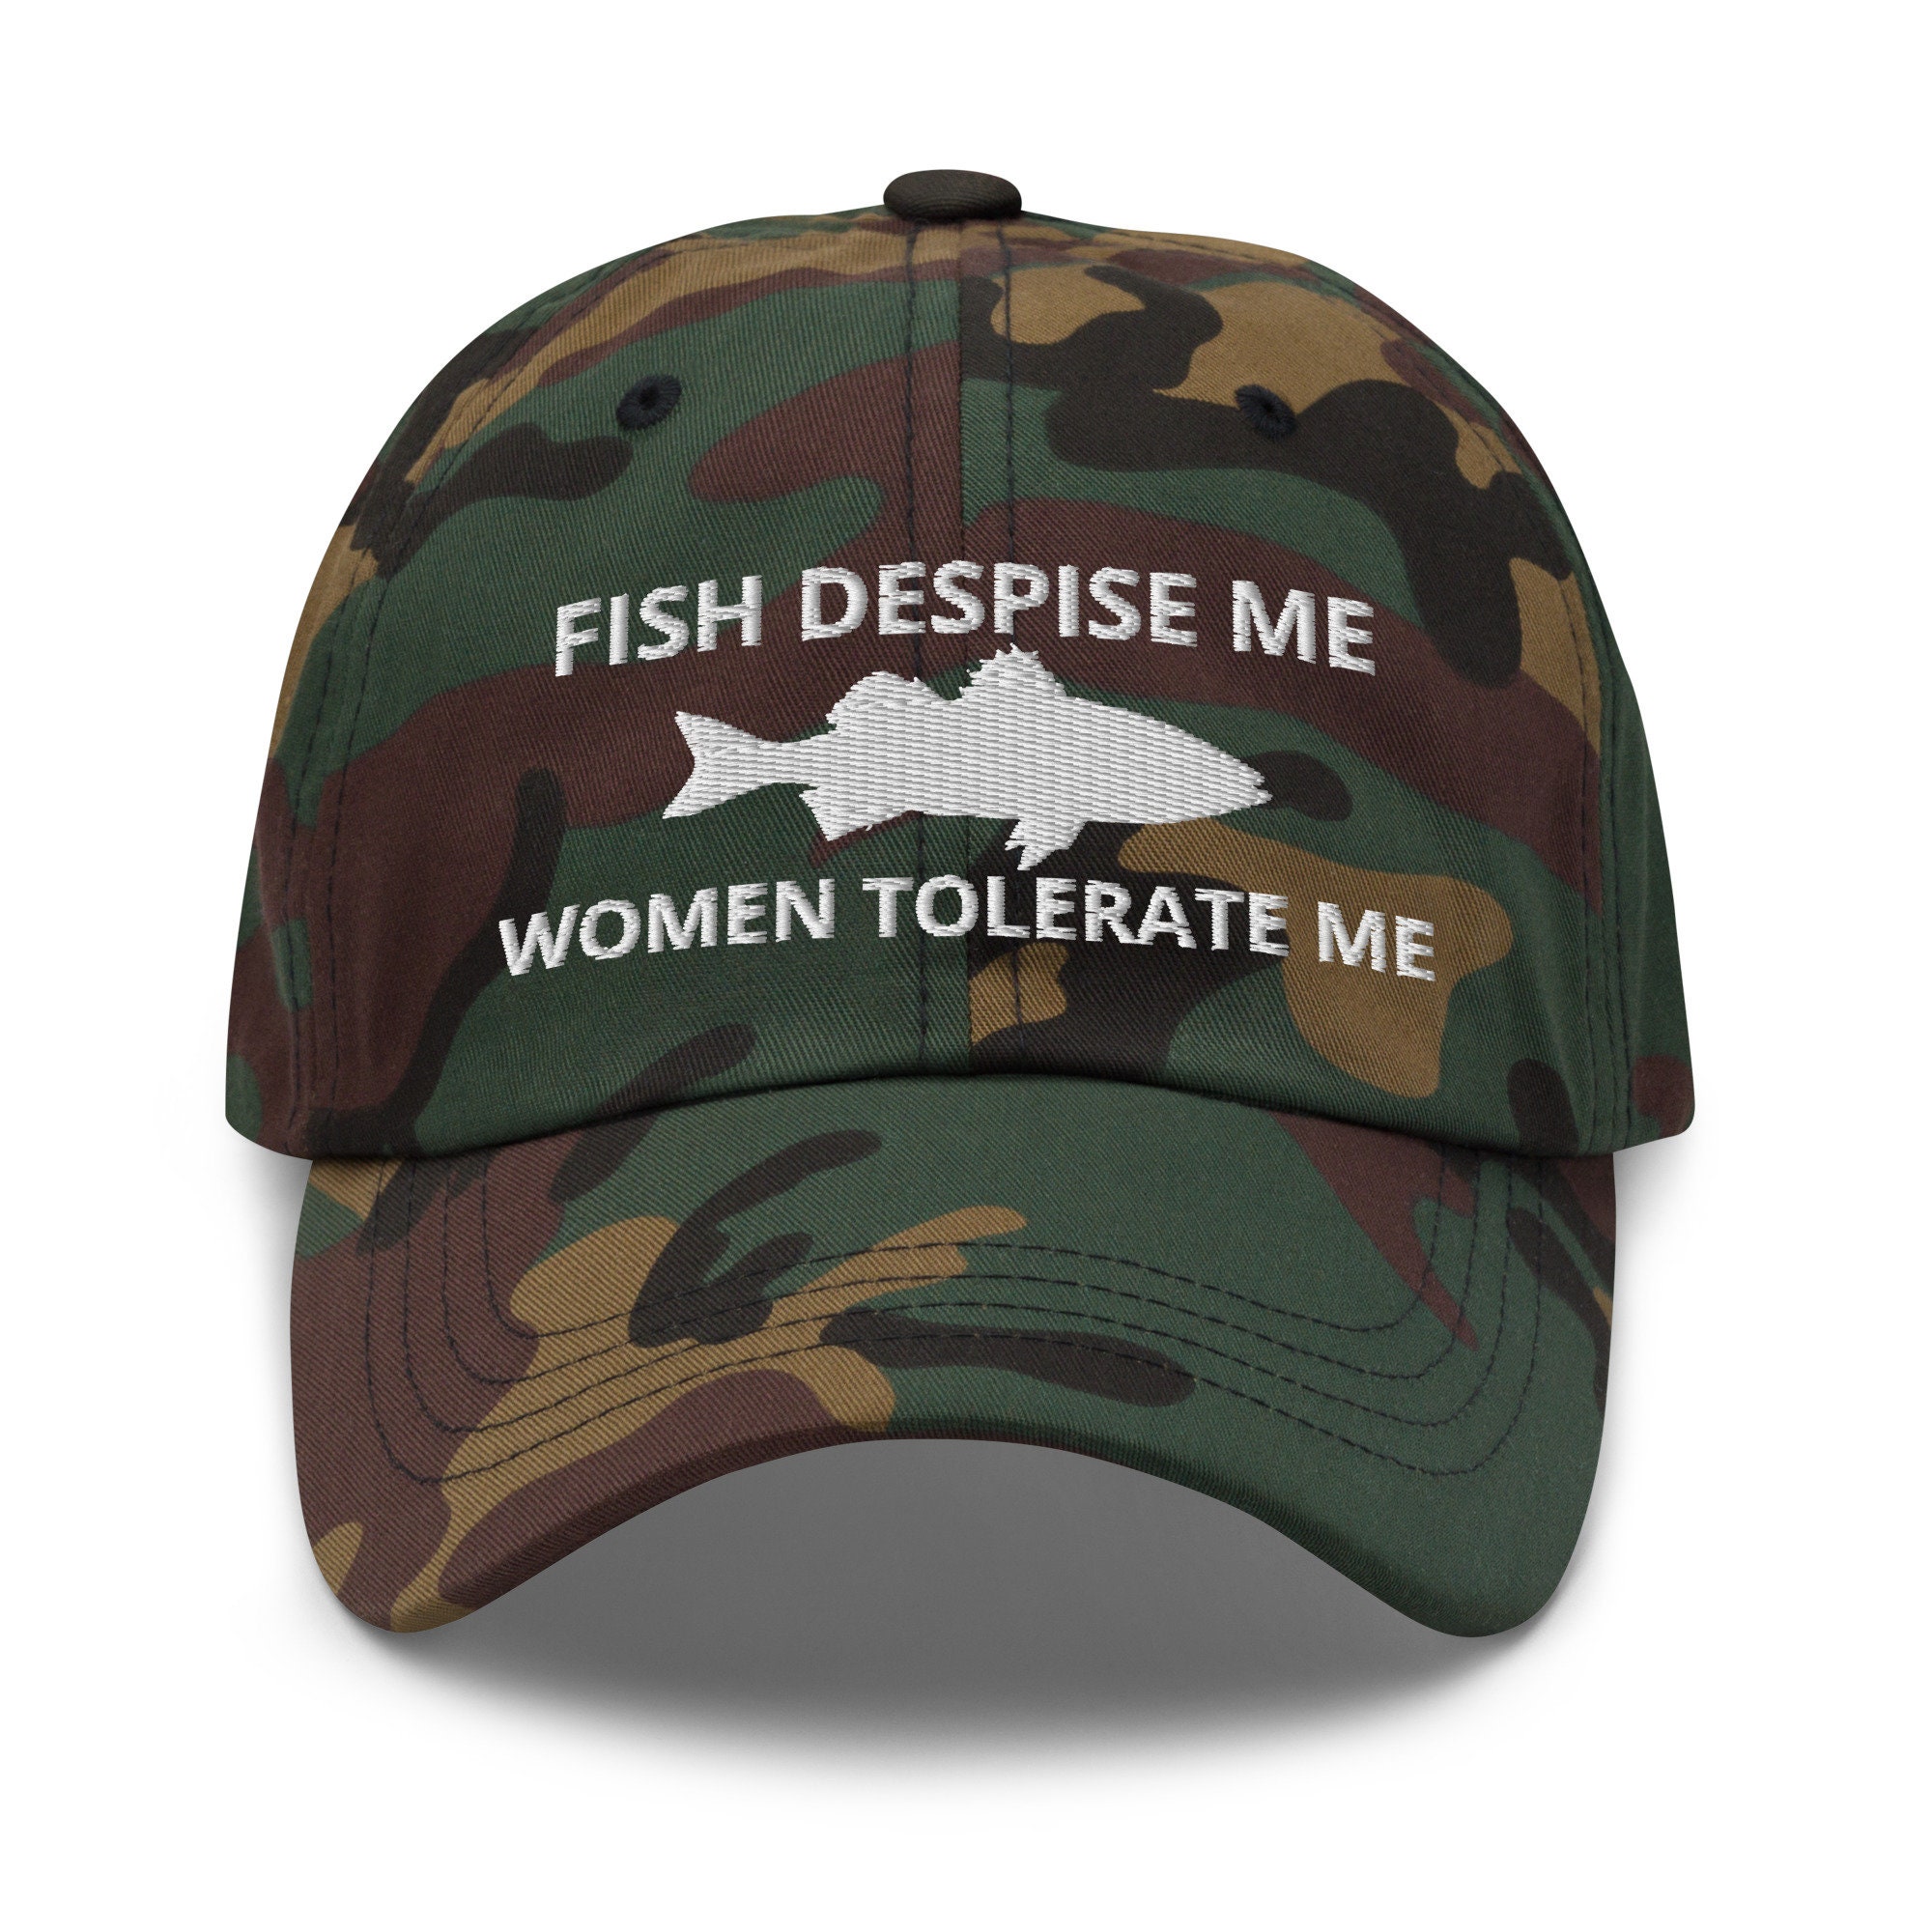 Funny Fishing Hat, Fish Despise Me Women Tolerate Me, Red Fishing Hat